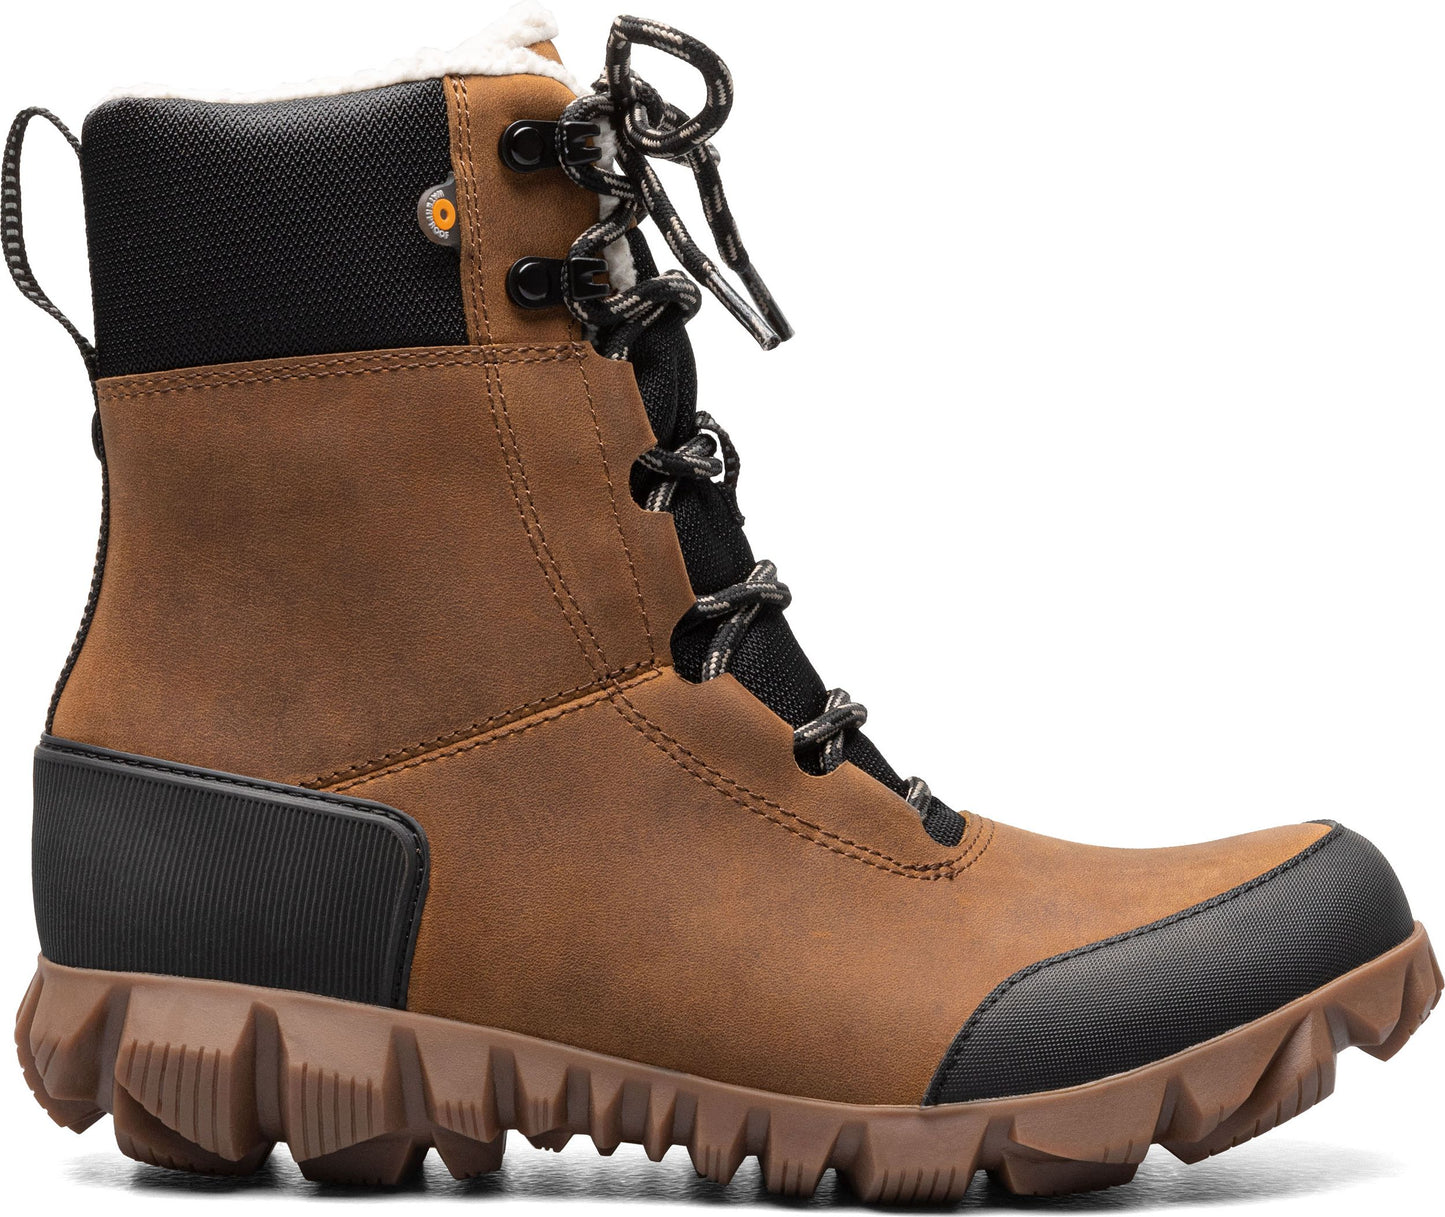 BOGS Boots Arcata Urban Leather Tall Carml